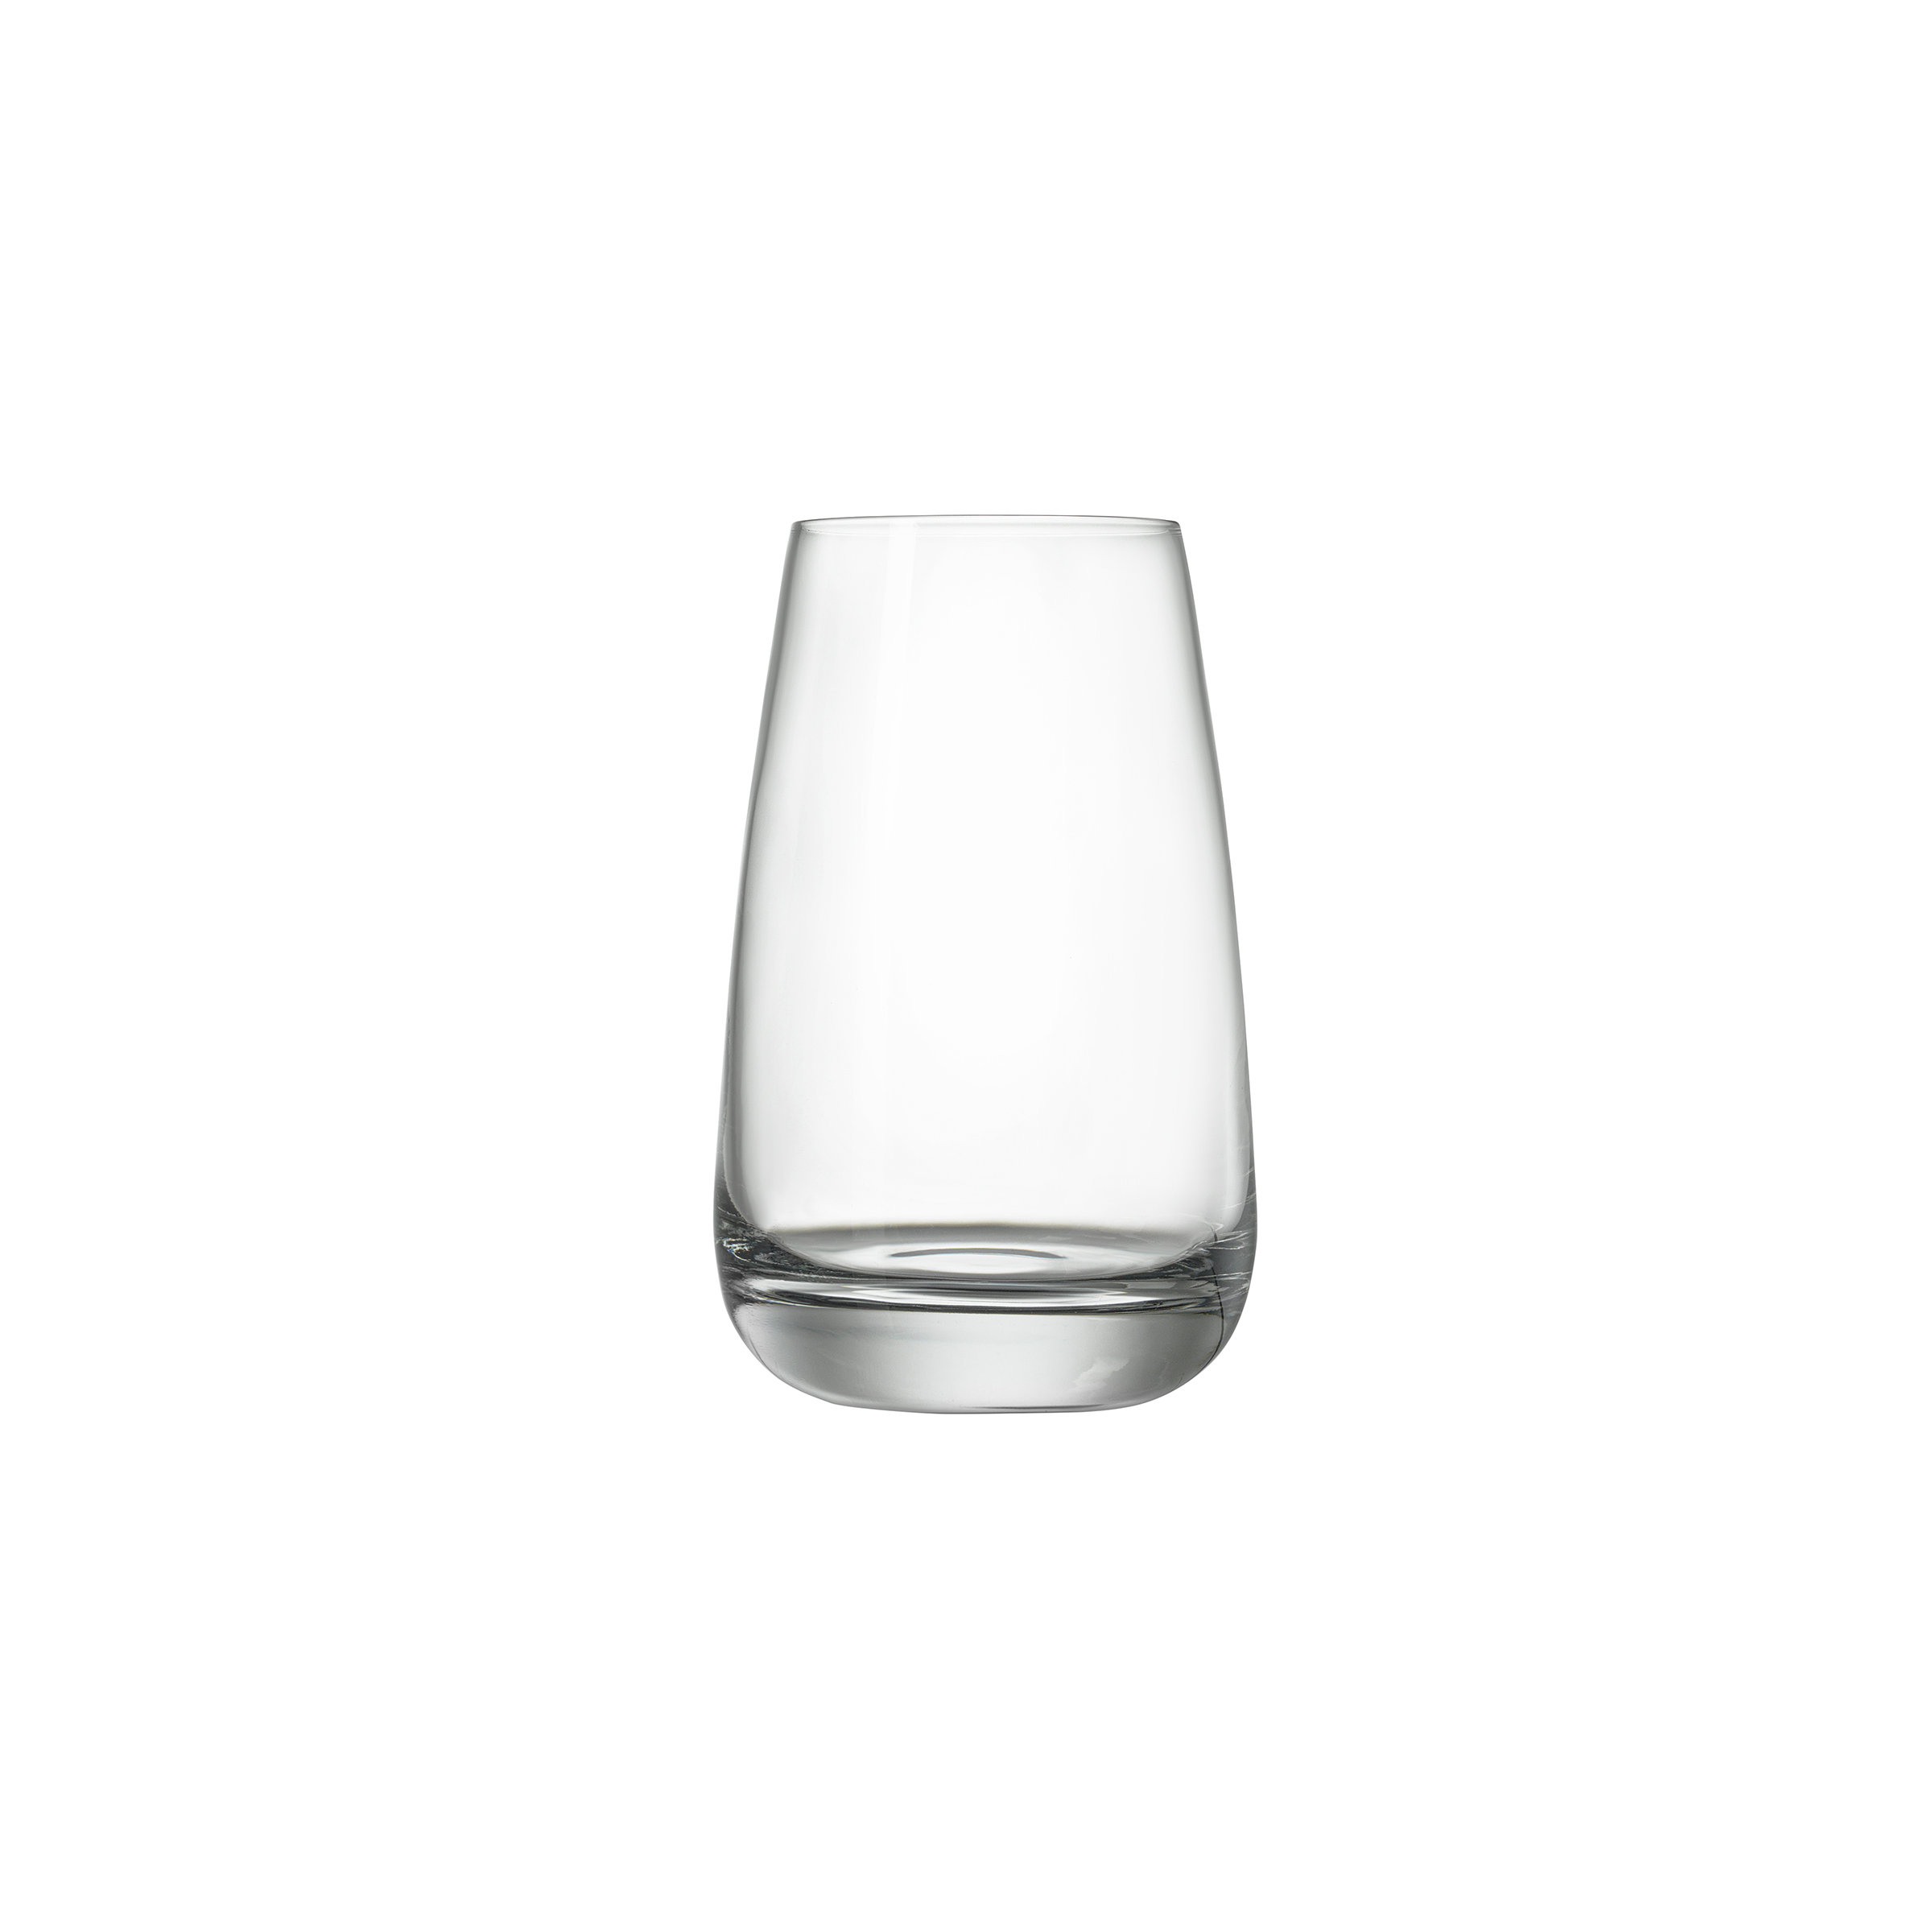  Drinking Glasses Set of 12, Durable Glassware Set Includes  6-17oz Highball Glasses 6-13oz DOF Glasses